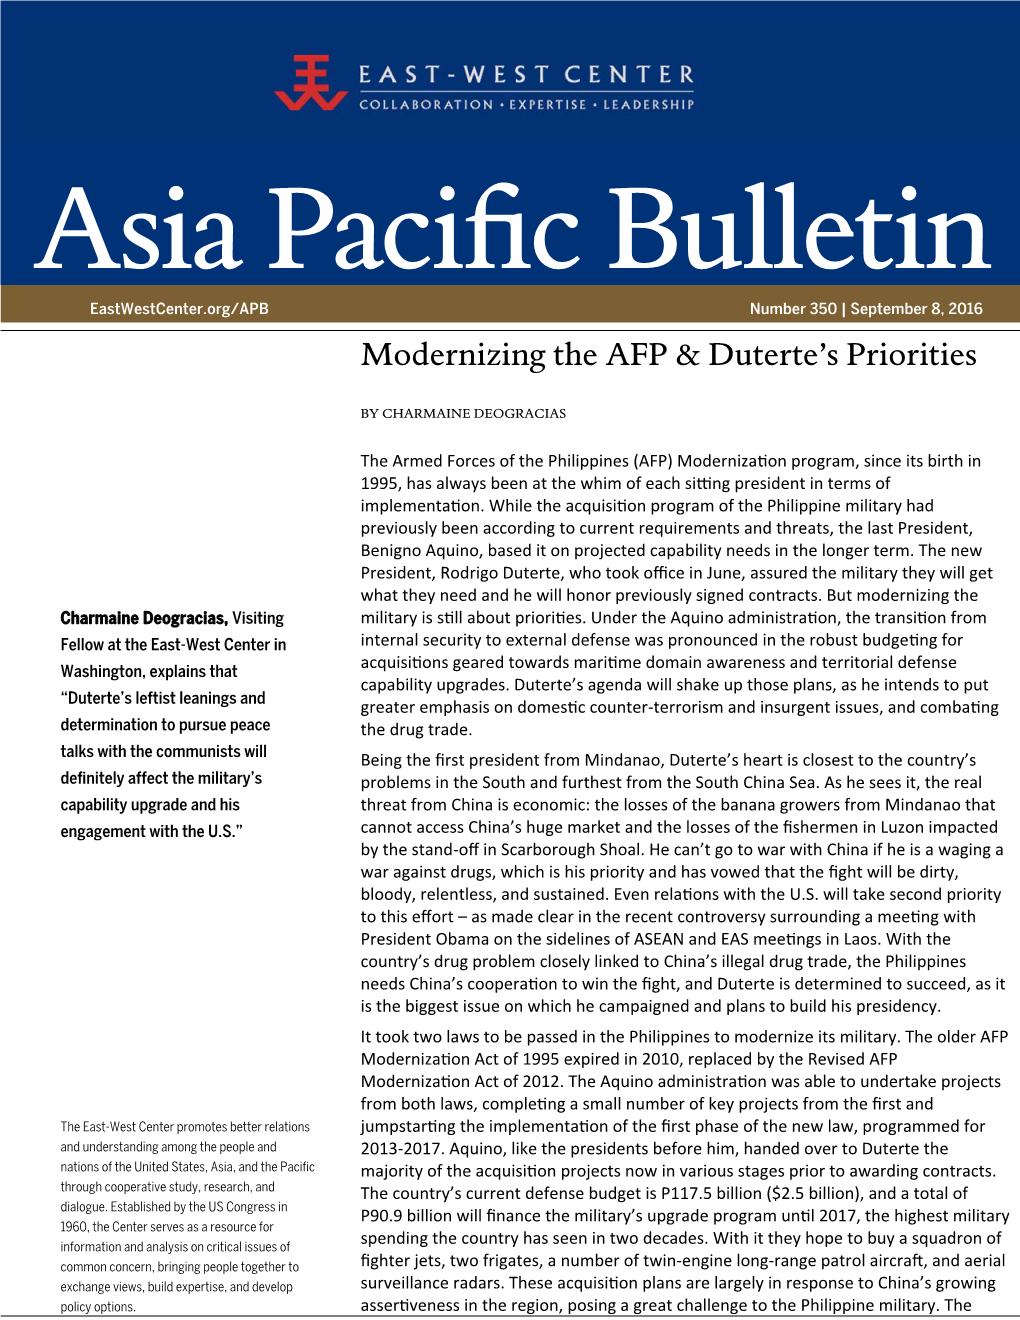 Modernizing the AFP & Duterte's Priorities